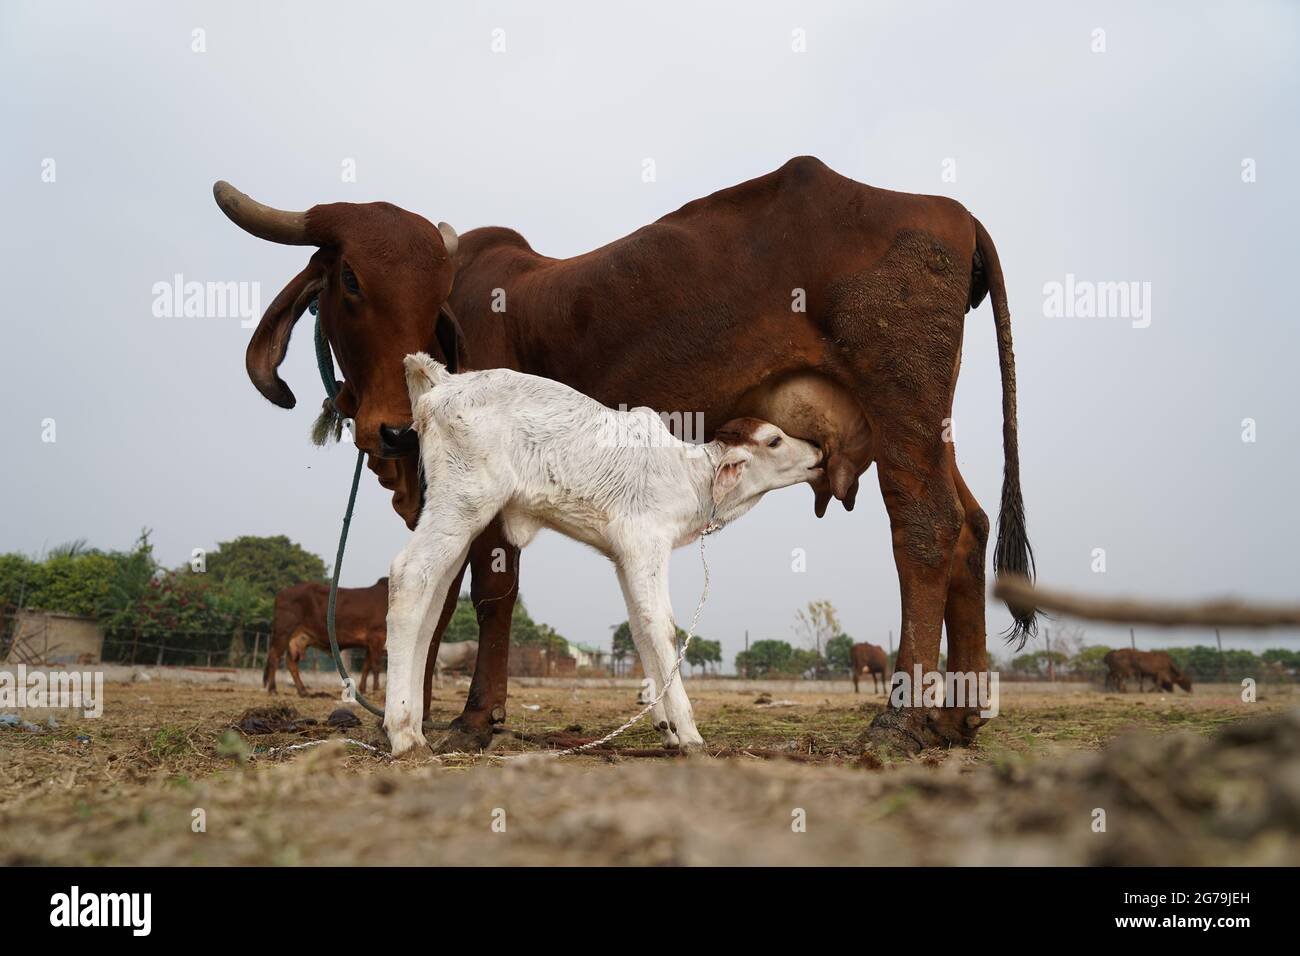 Indian Cow PNG Images, Transparent Indian Cow Image Download - PNGitem